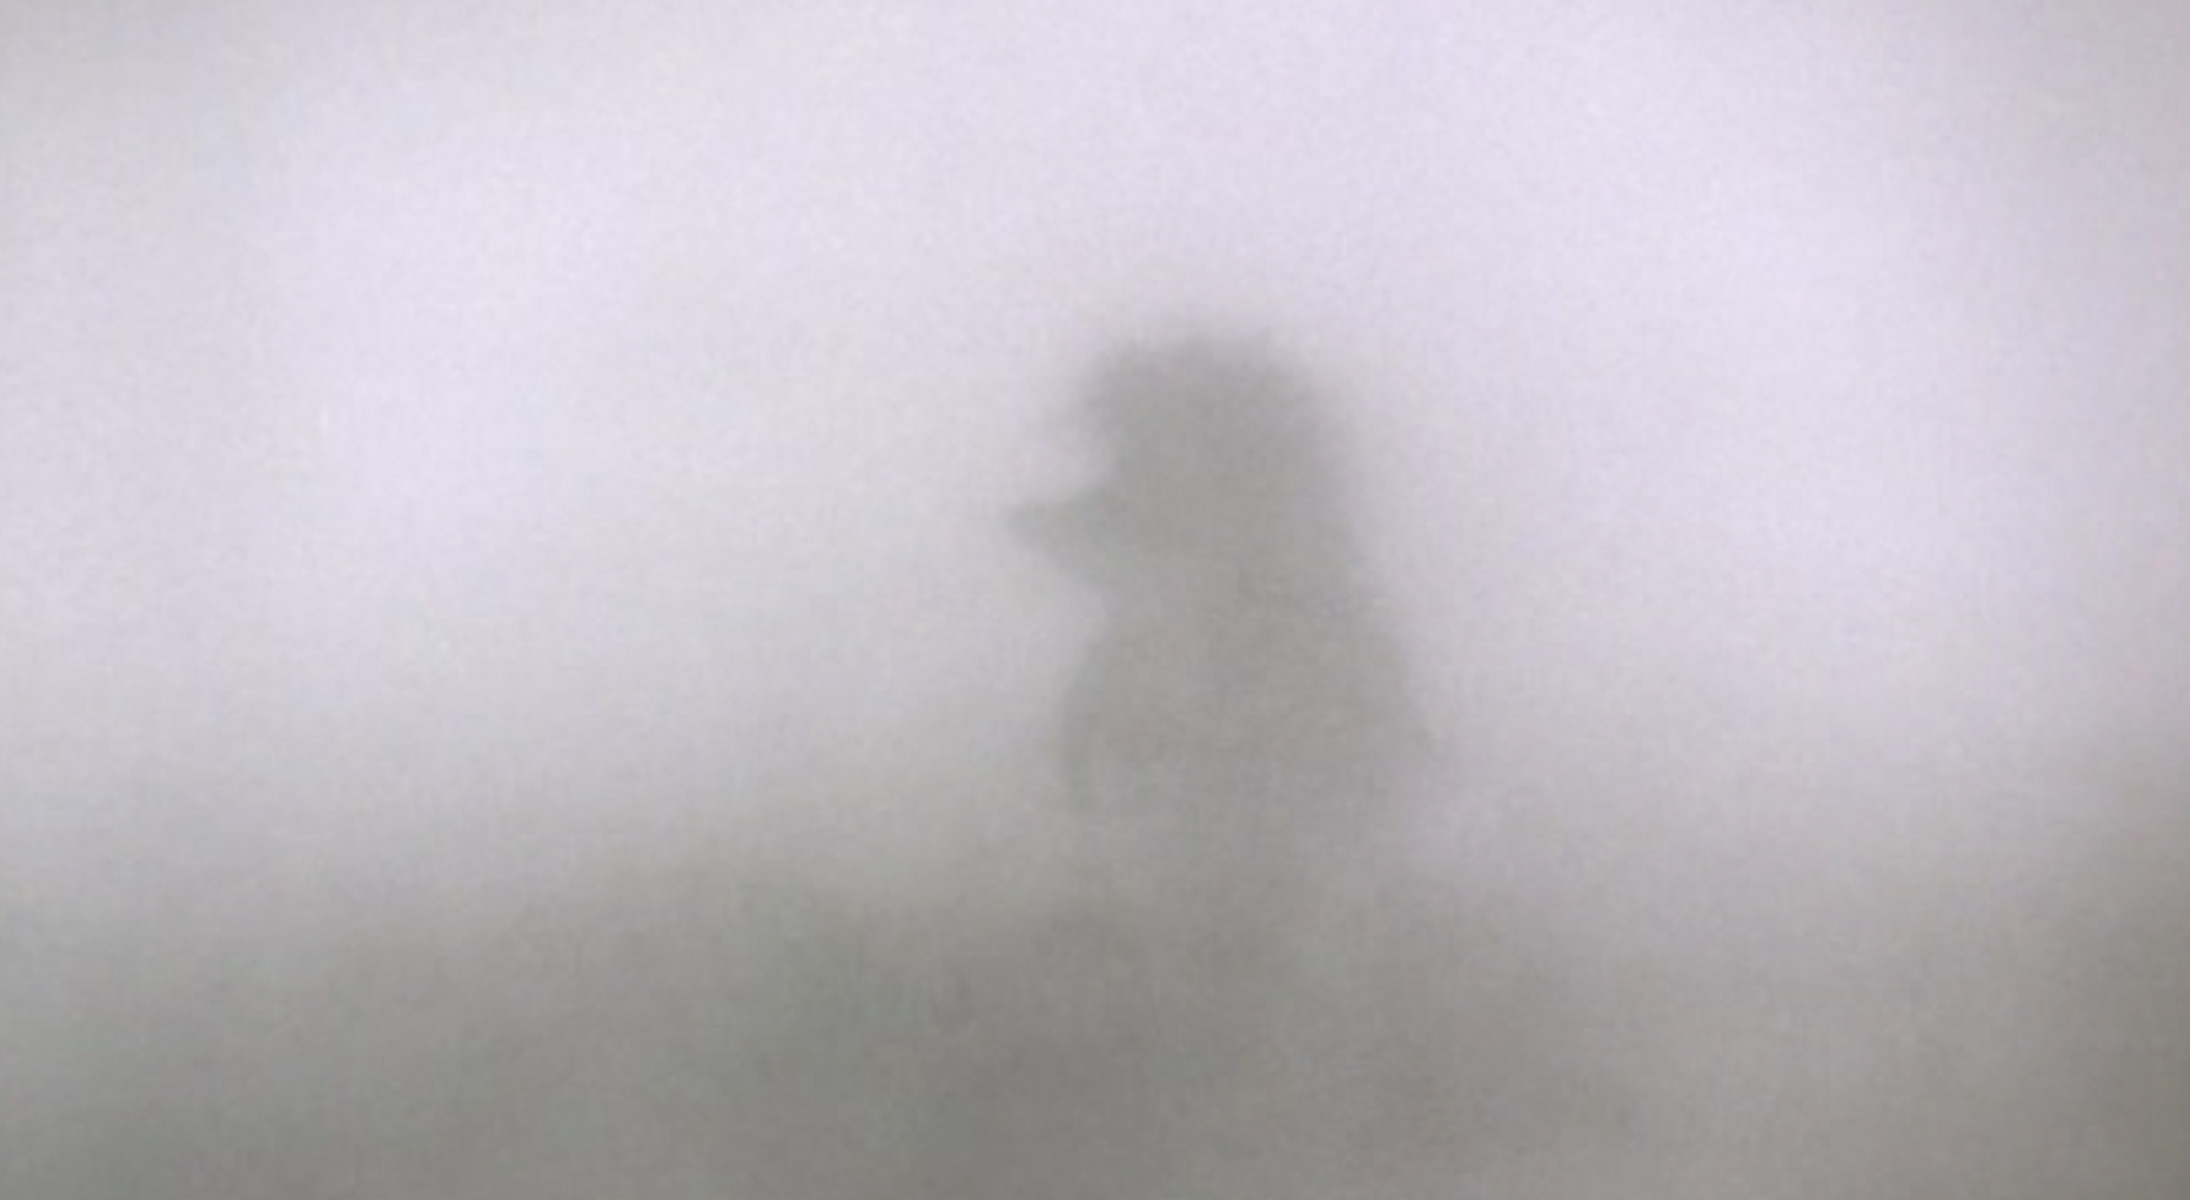 метафора человека в тумане